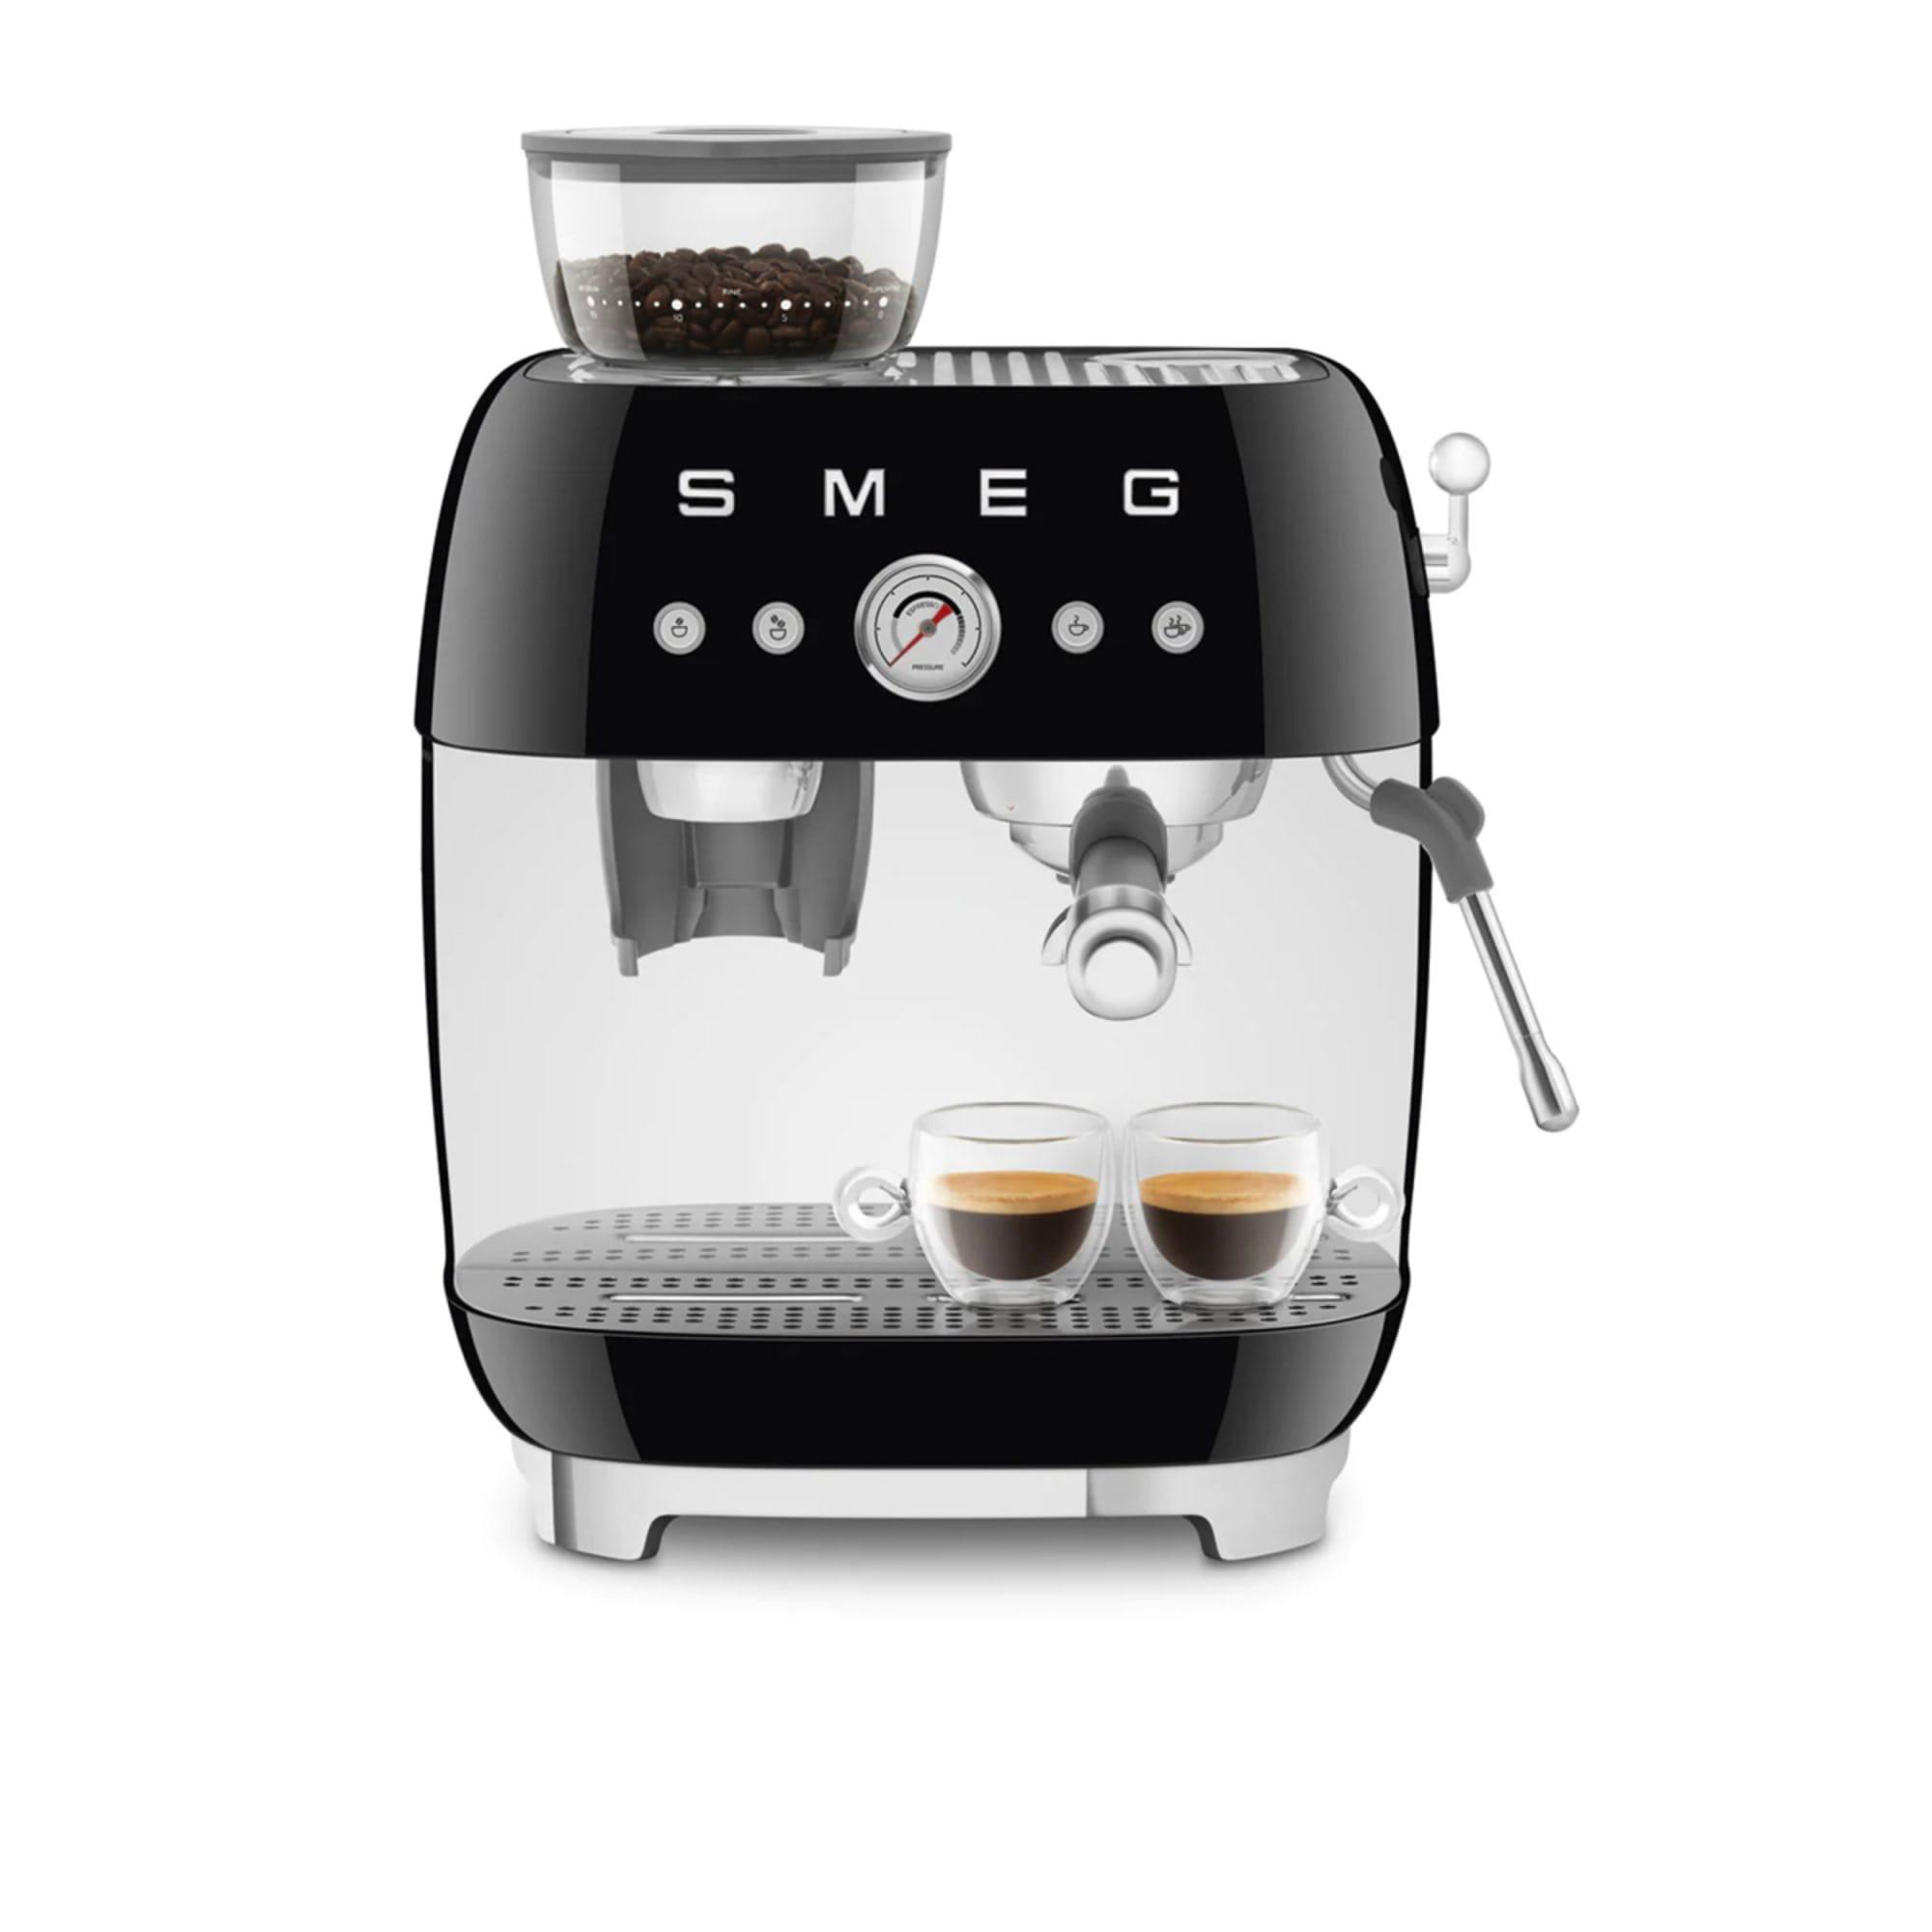 Smeg 50's Retro Style Espresso Machine with Built In Grinder Black Image 5